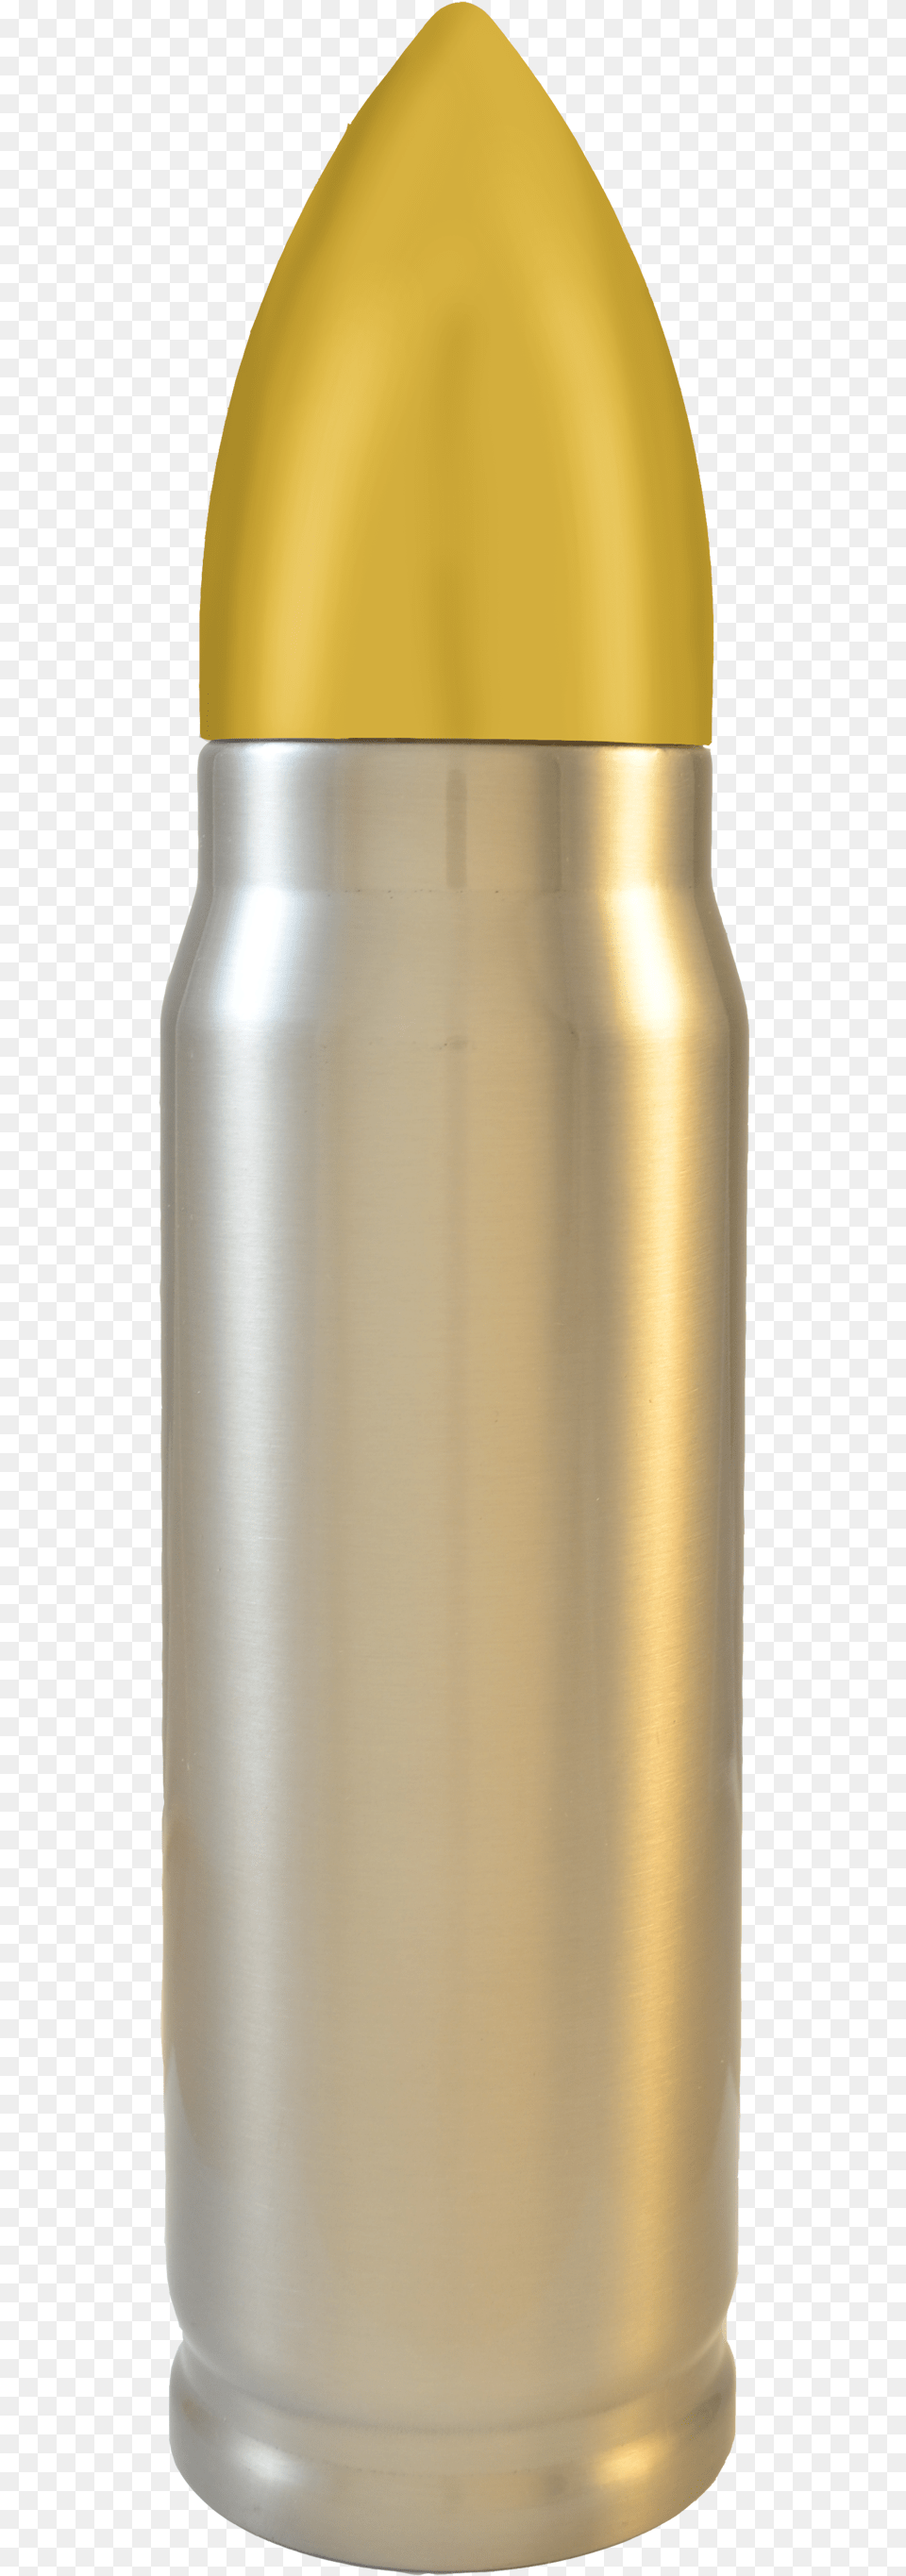 Bullet Thermos Case Bullet, Ammunition, Weapon, Bottle, Shaker Png Image